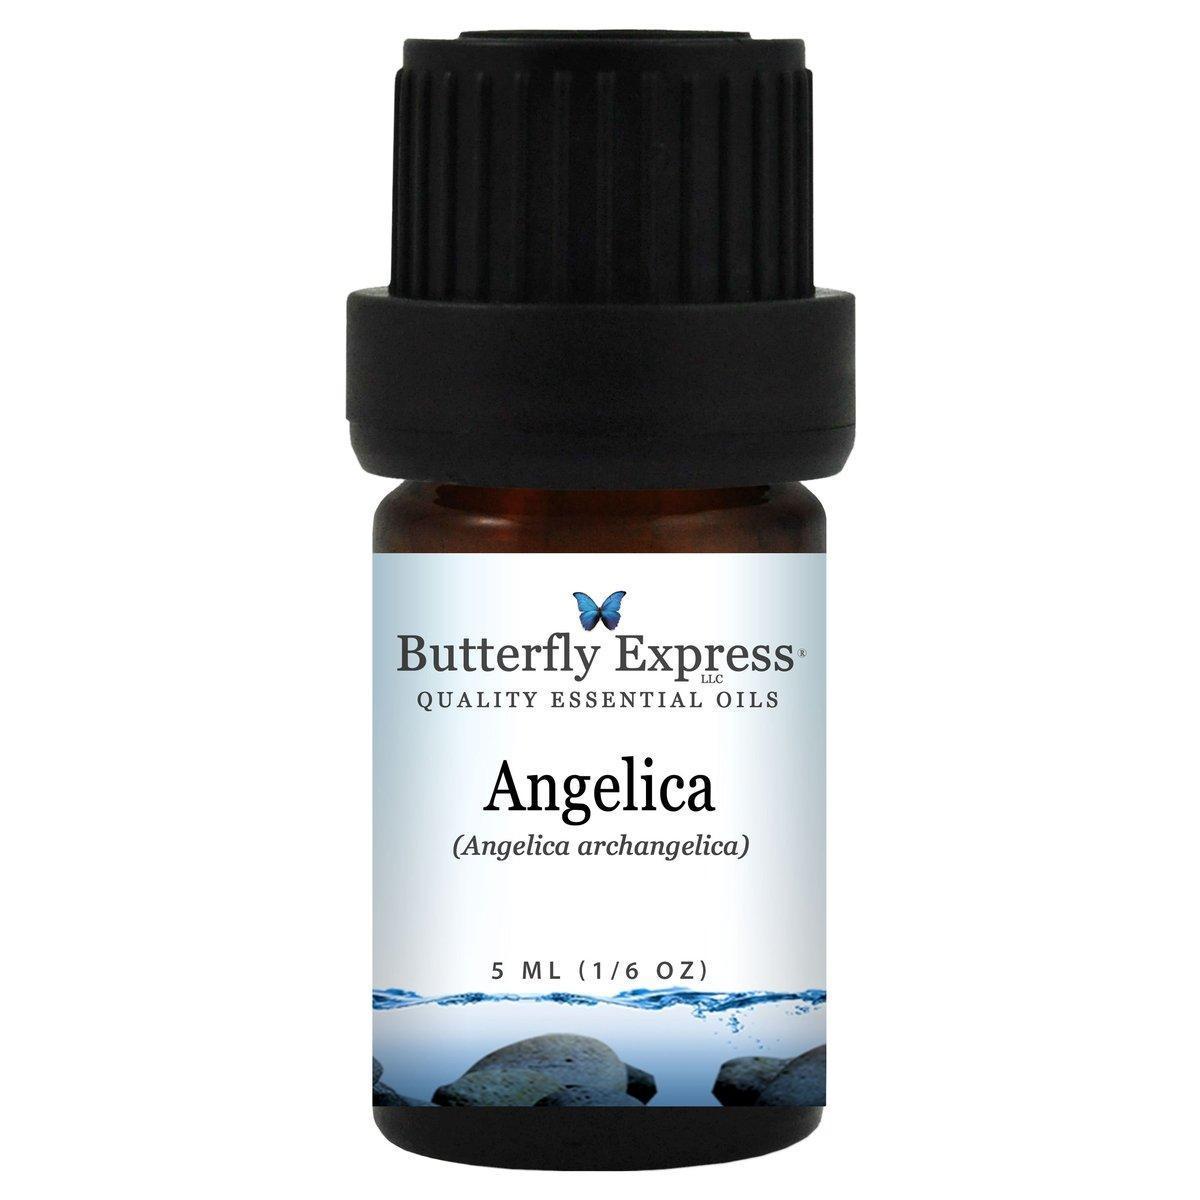 Angelica essential oils